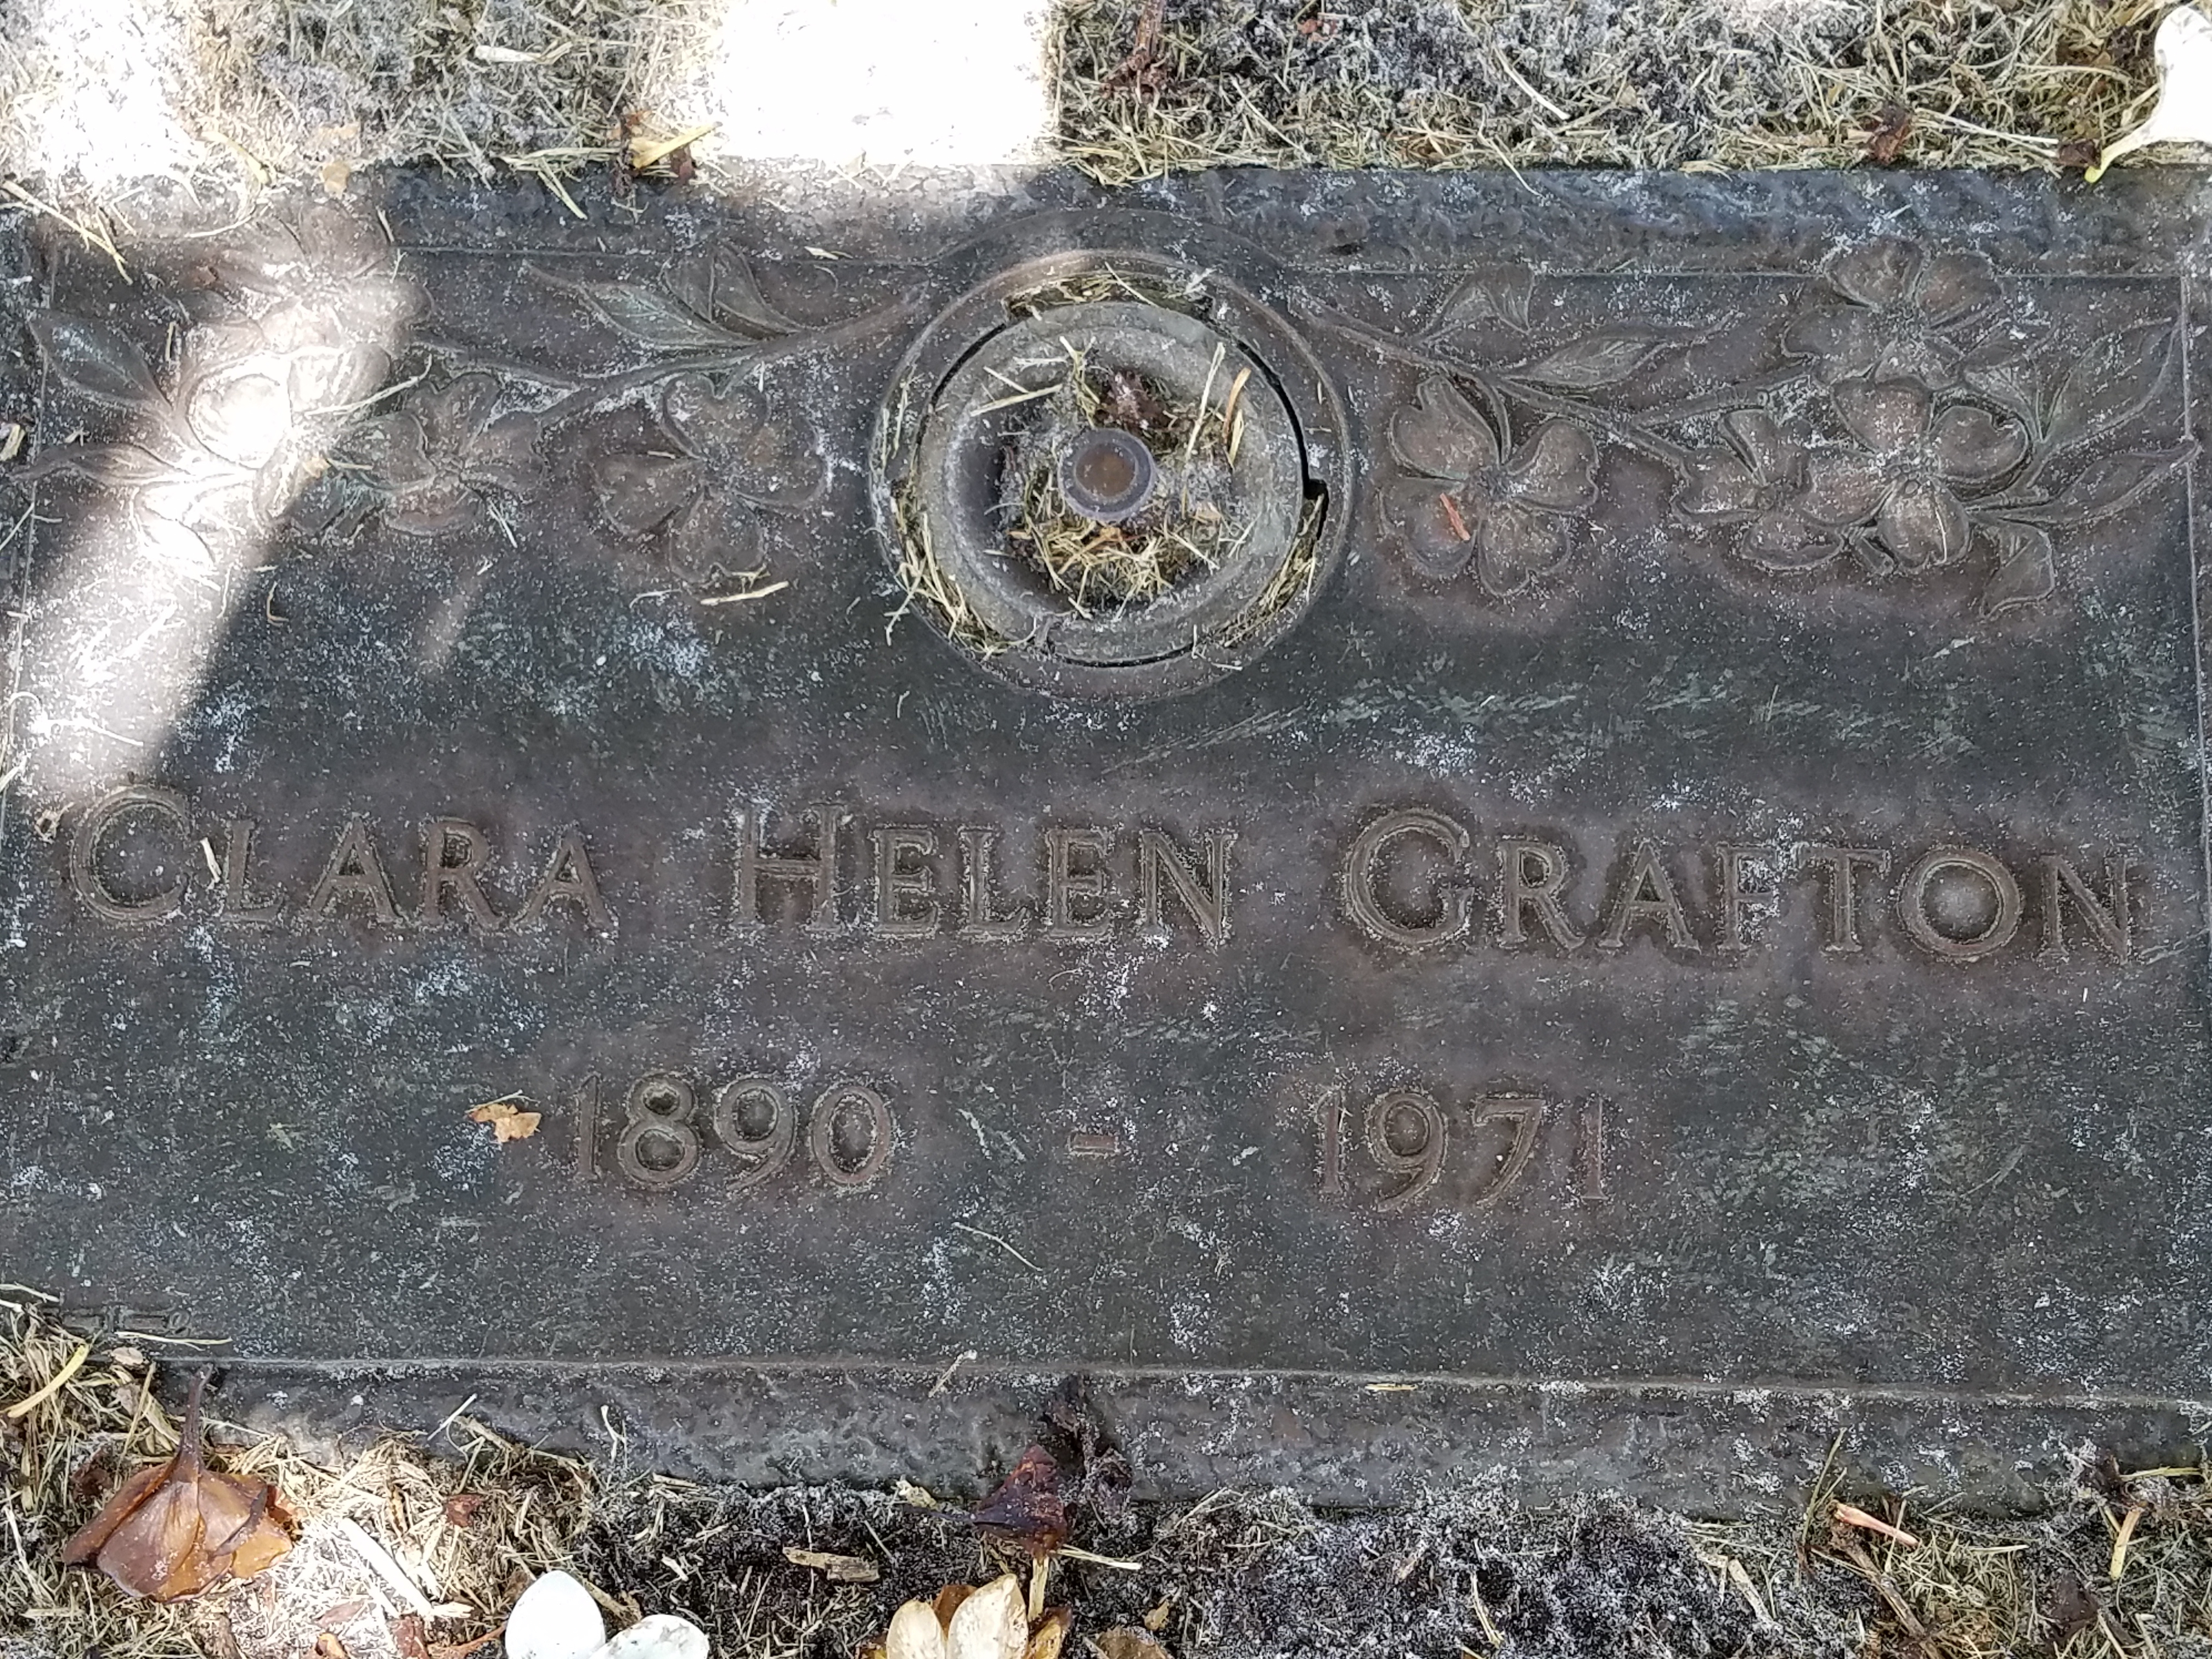 Clara Helen Grafton